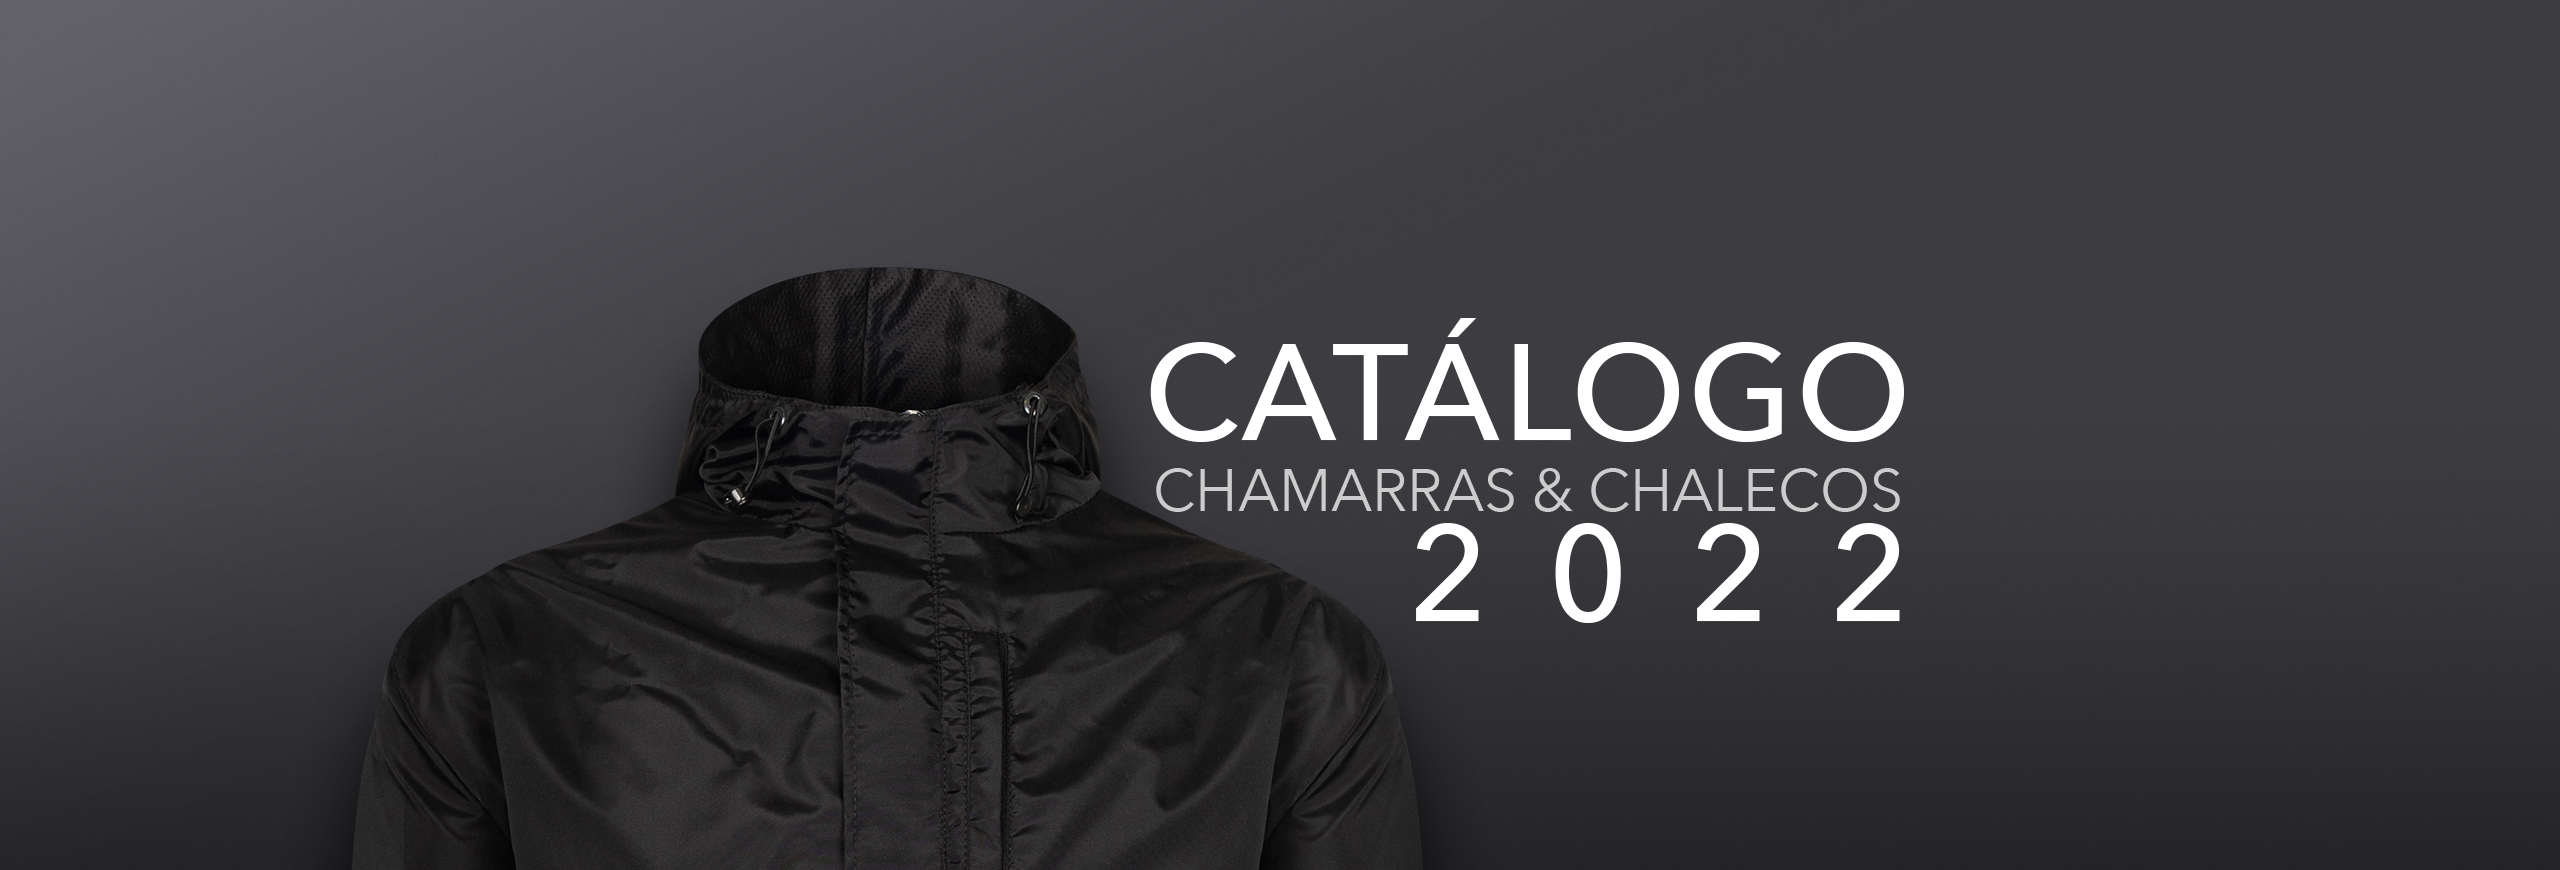 Banners-Web-Catálogo-Chamarras-2022